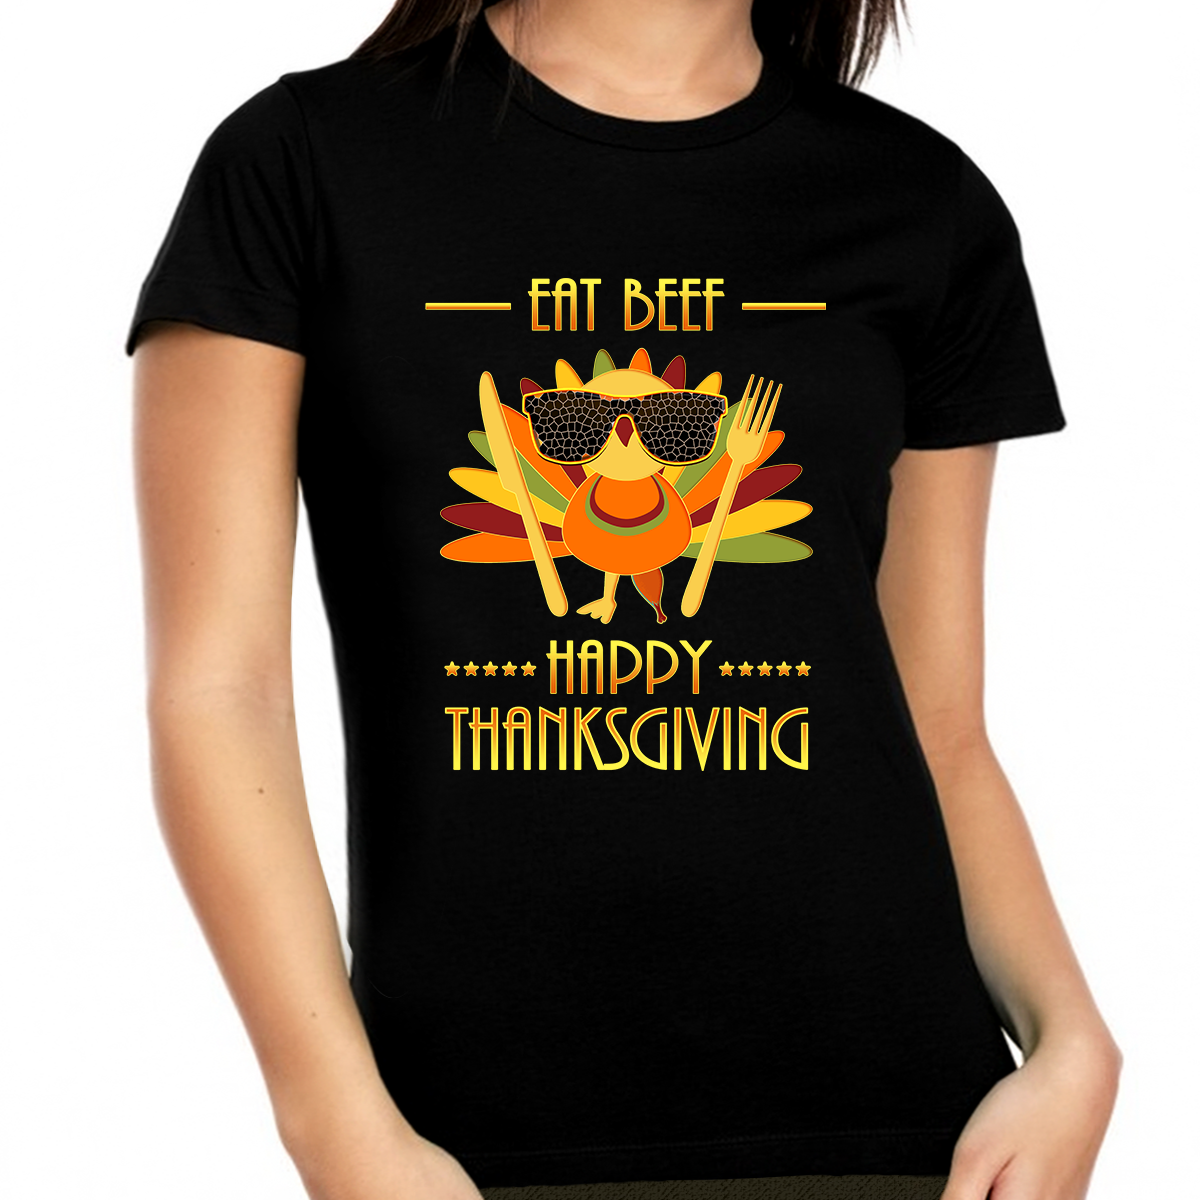 Thanksgiving Shirts for Women Plus Size 1X 2X 3X 4X 5X Funny Turkey Shirt Eat Beef Shirt for Thanksgiving